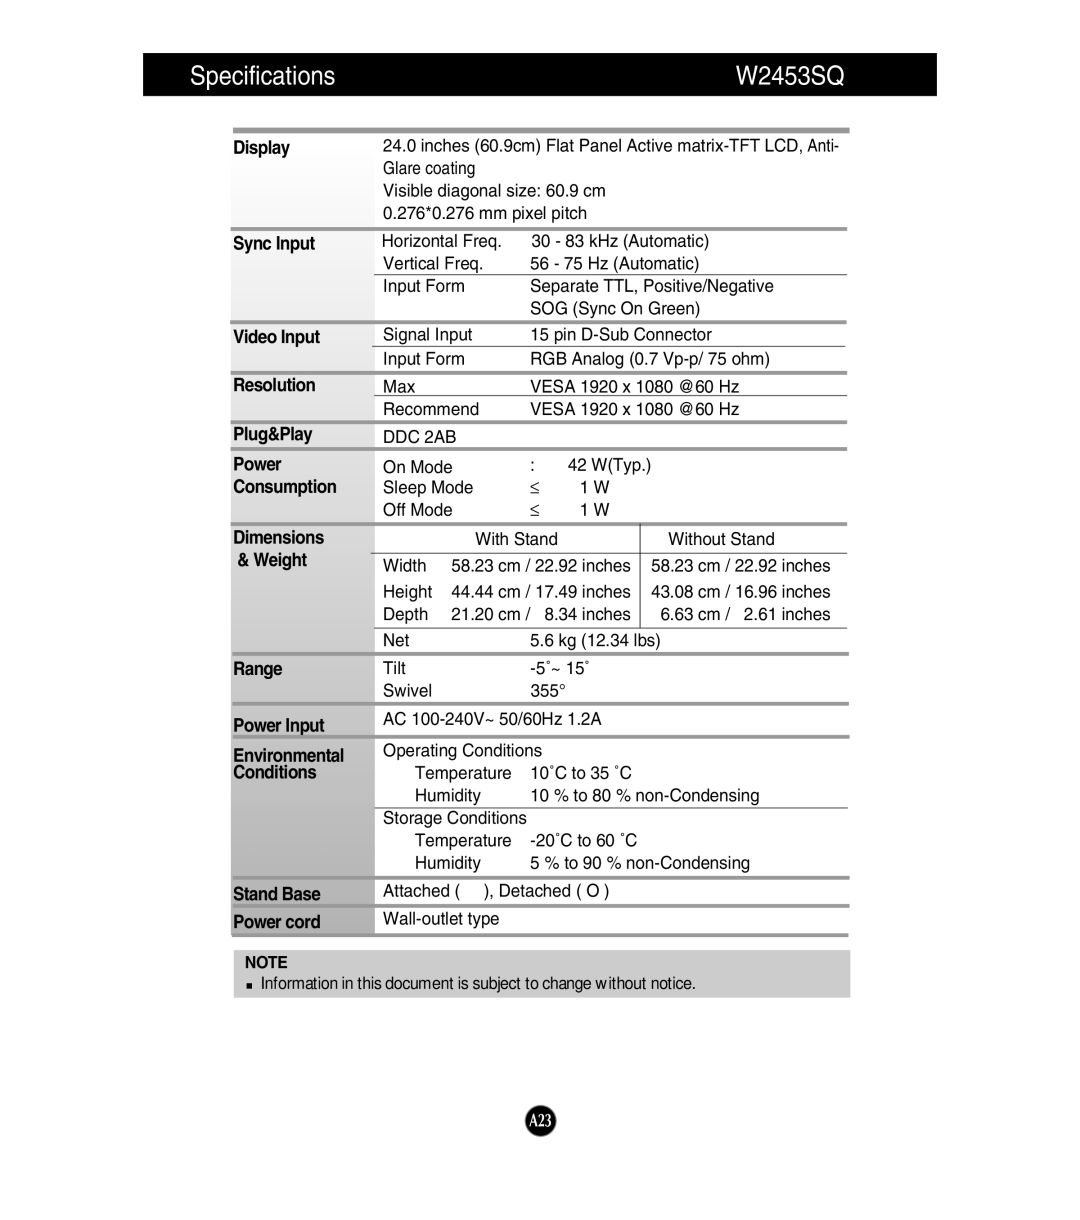 LG Electronics manual Specifications W2453SQ 